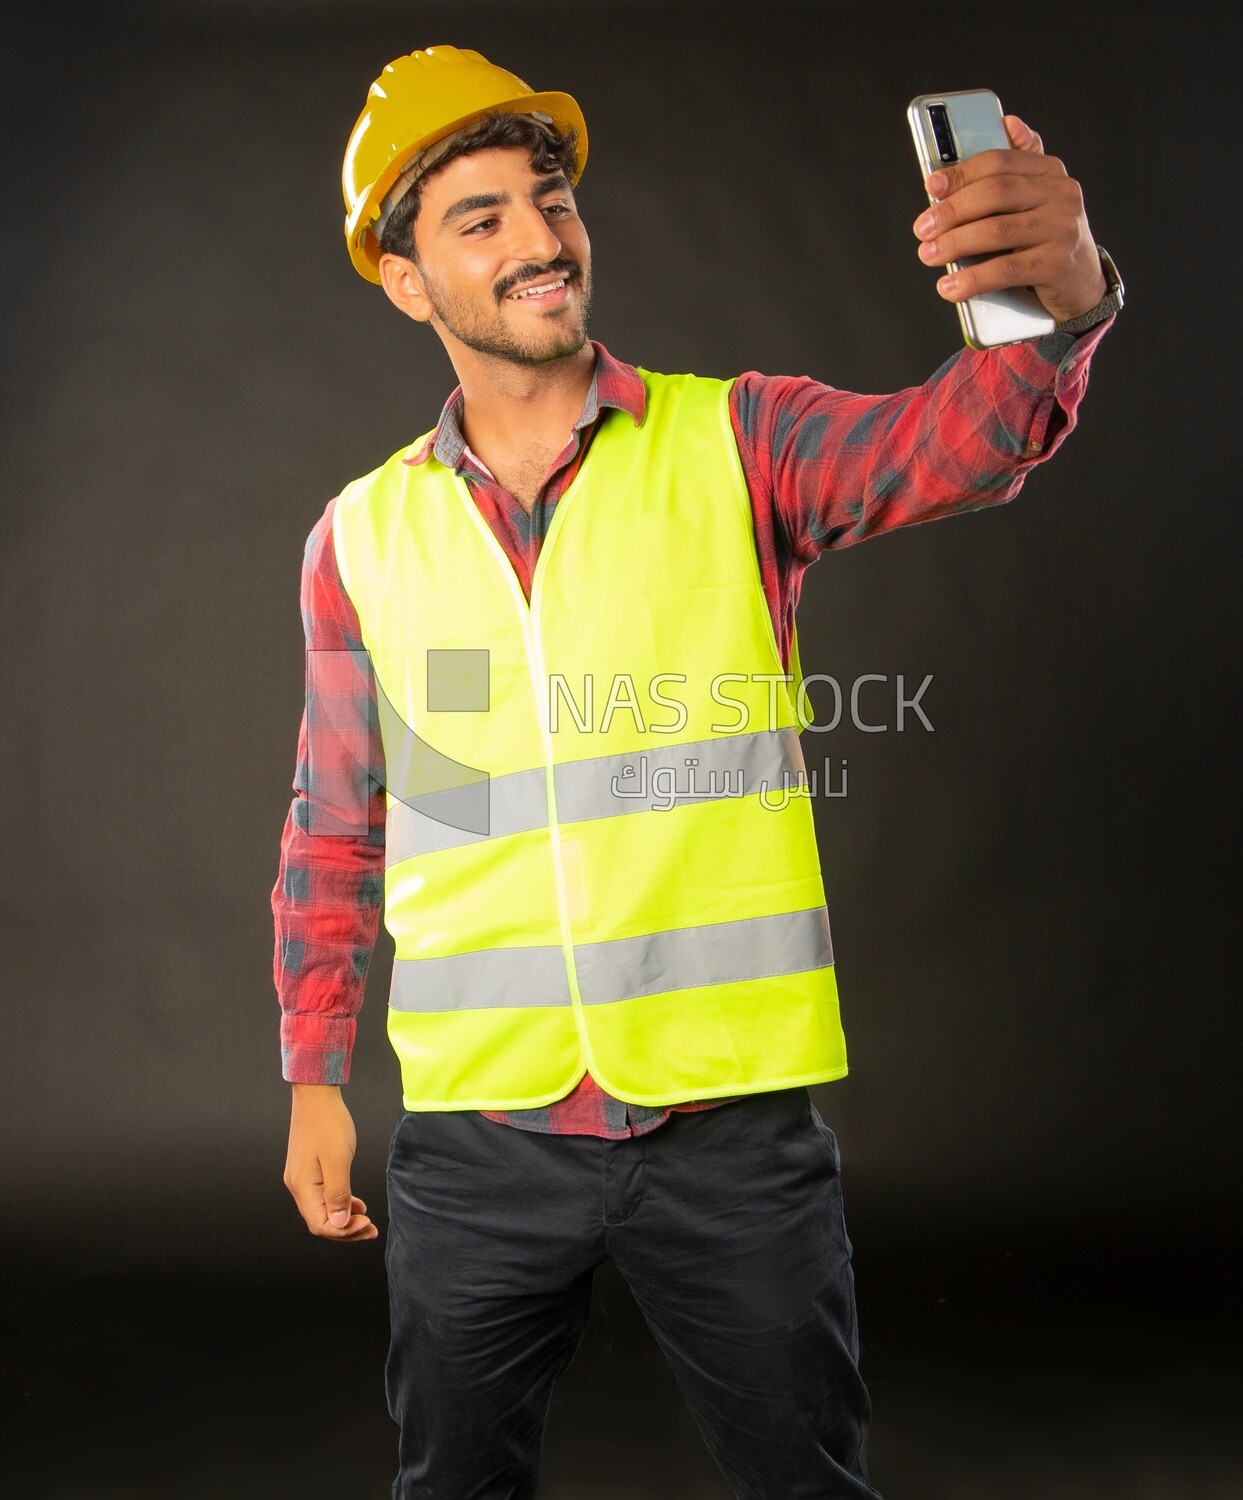 An engineer man wearing a safe jacket